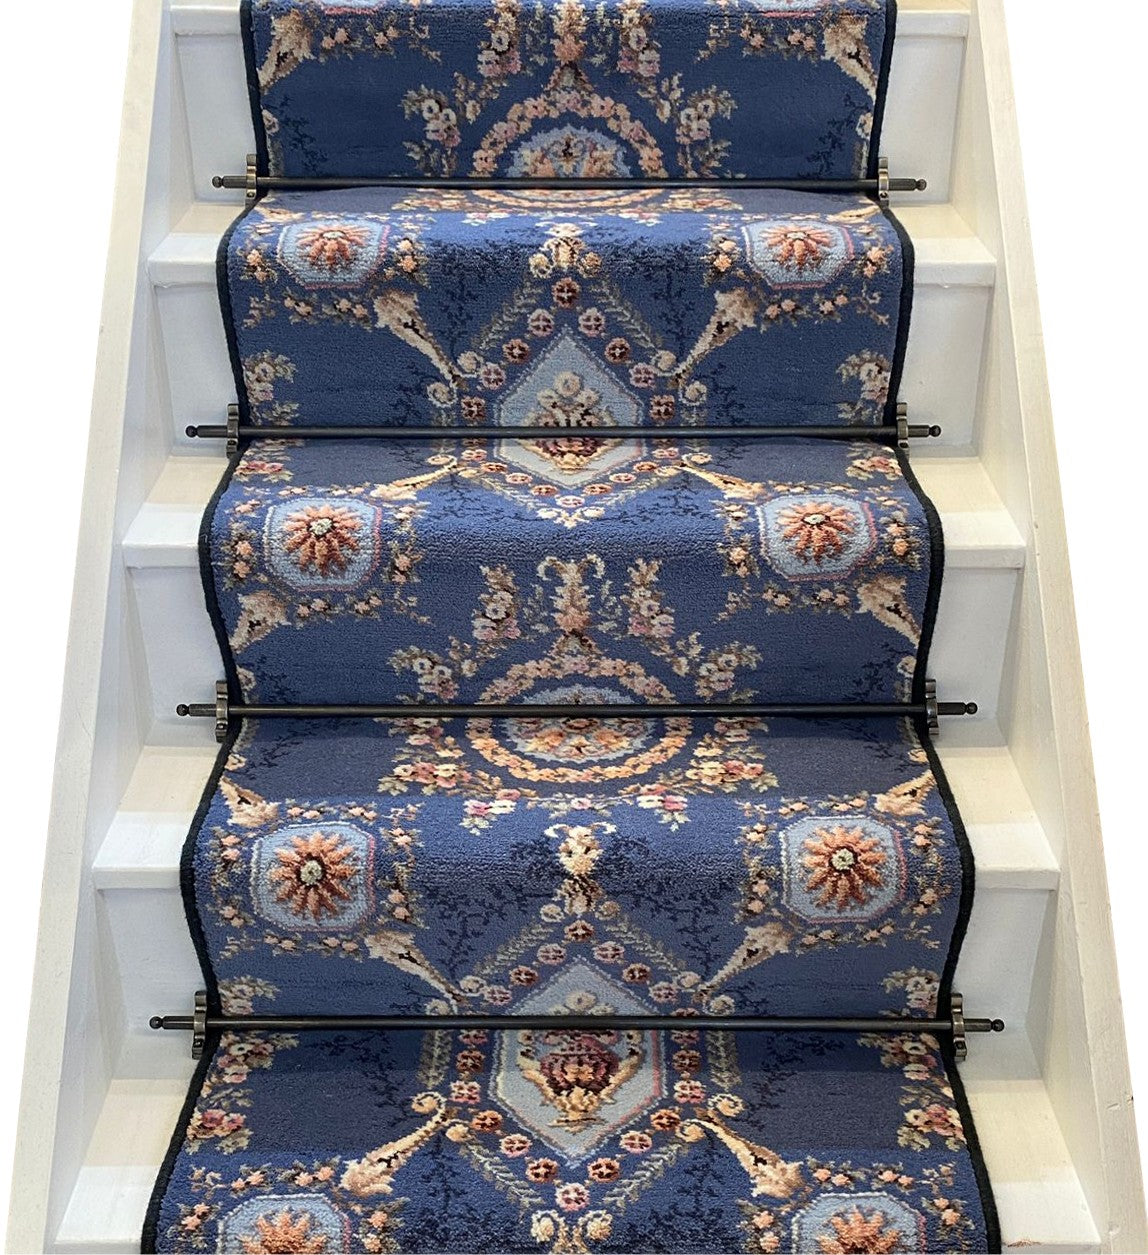 Ulster Carpets Glendun Blue Lorenzo Stair Runner with choice of adding bespoke border or overlocking colour (per linear metre)